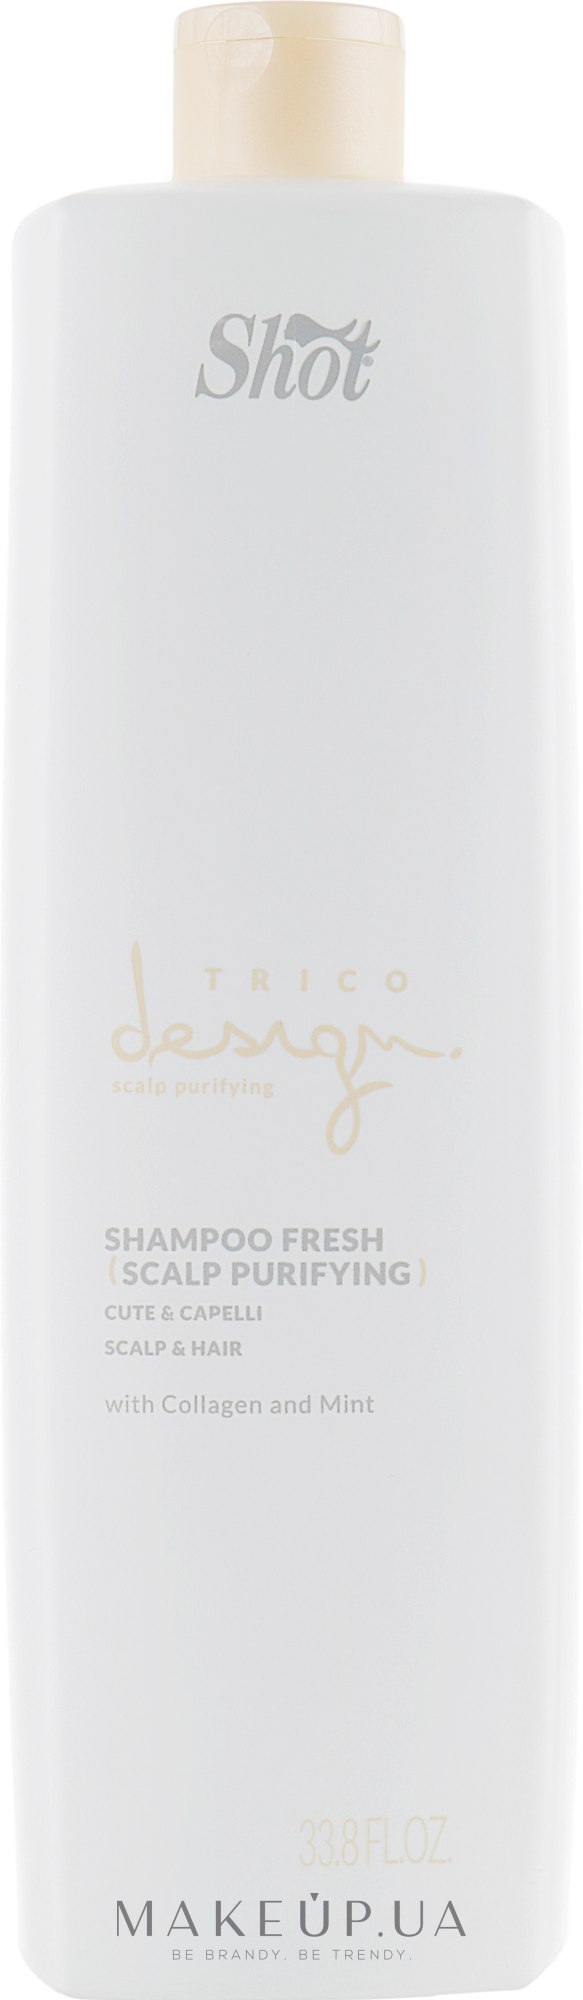 Восстанавливающий шампунь для кожи головы - Shot Trico Design Scalp Purifying Fresh Ice Shampoo  — фото 1000ml